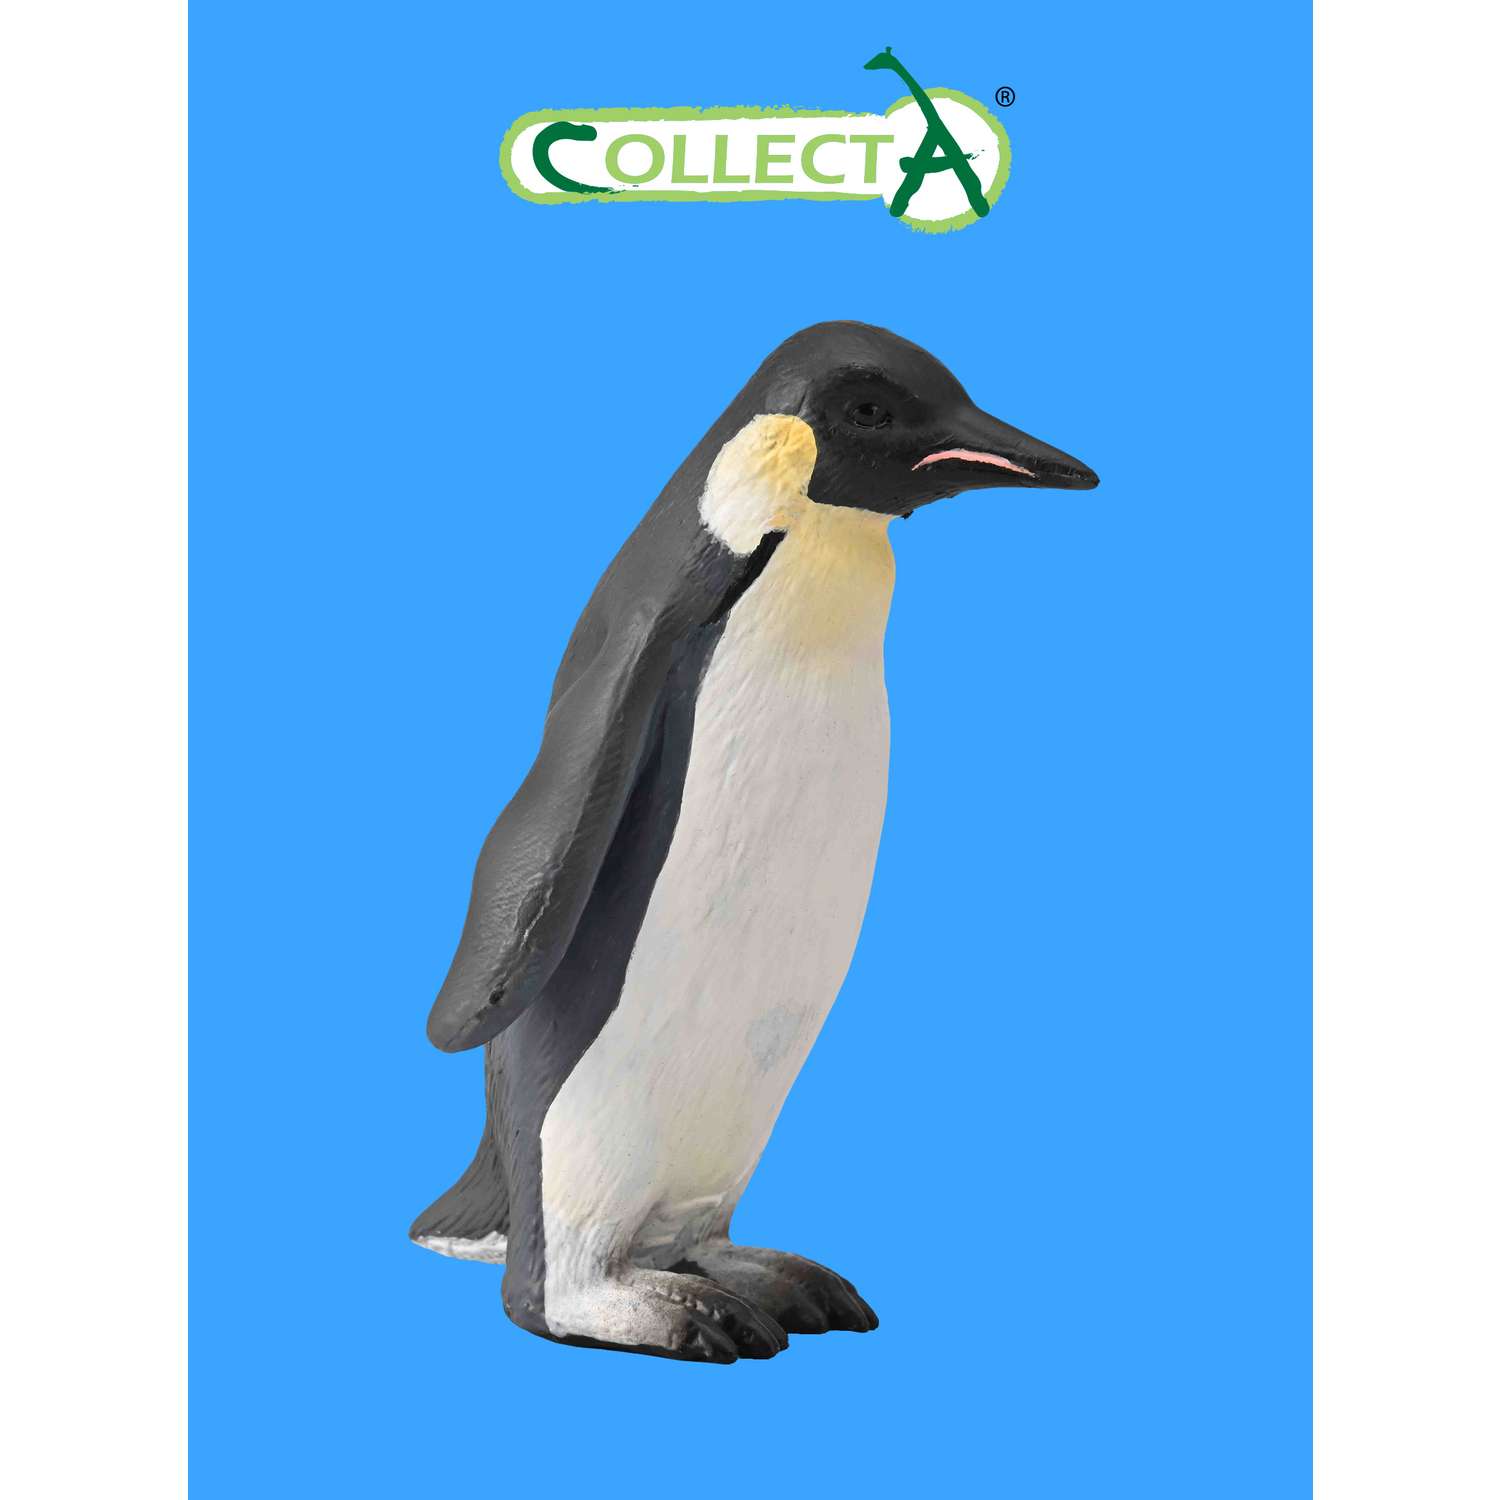 Фигурка животного Collecta Императорский пингвин - фото 1